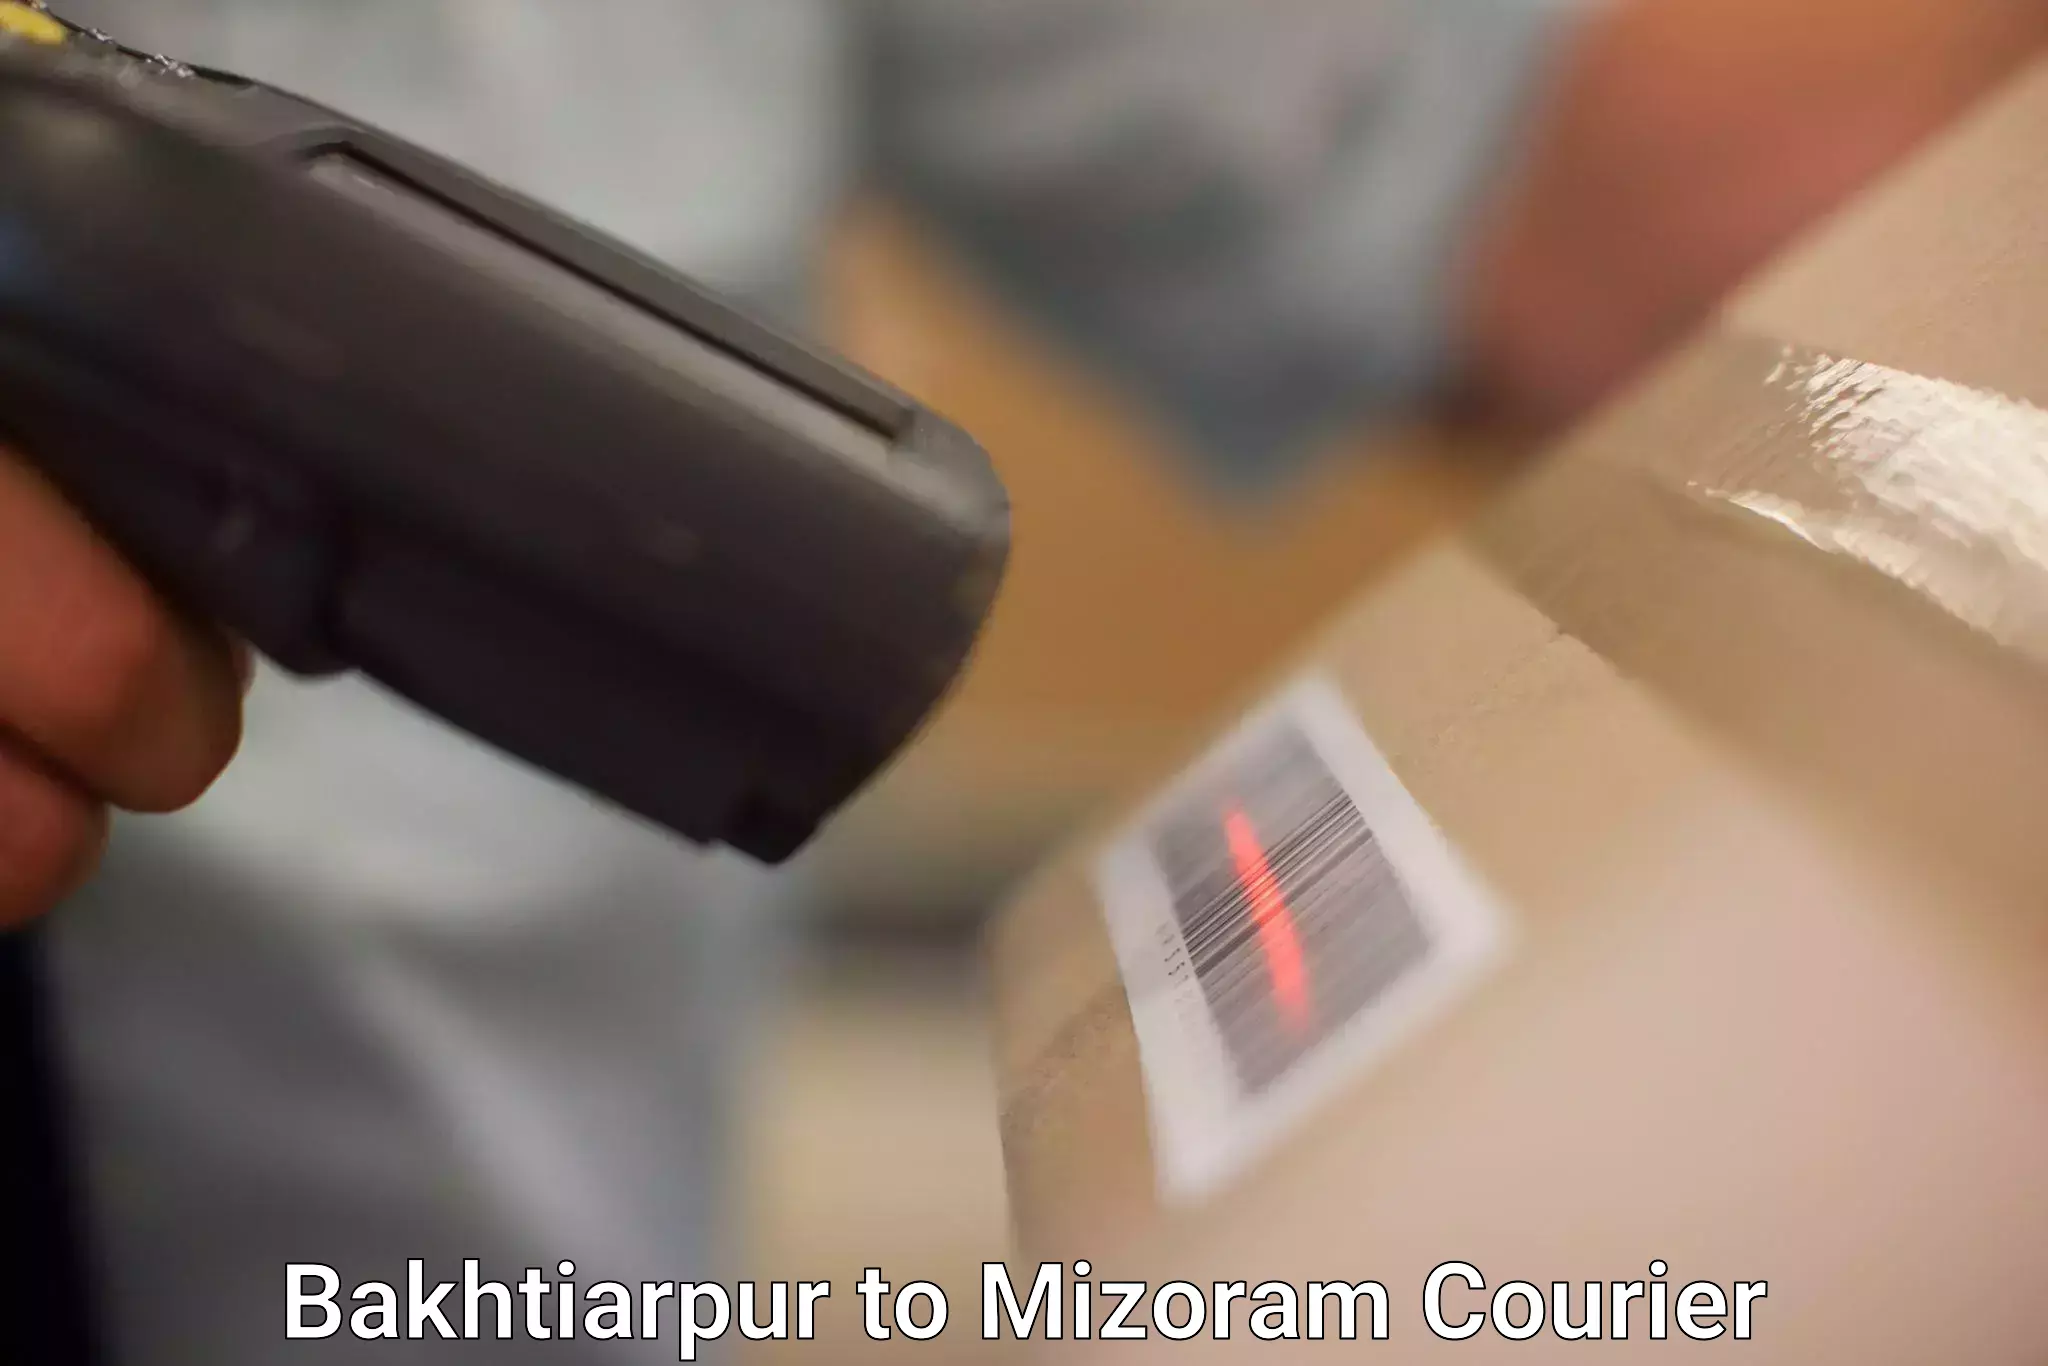 Affordable parcel service in Bakhtiarpur to Mizoram